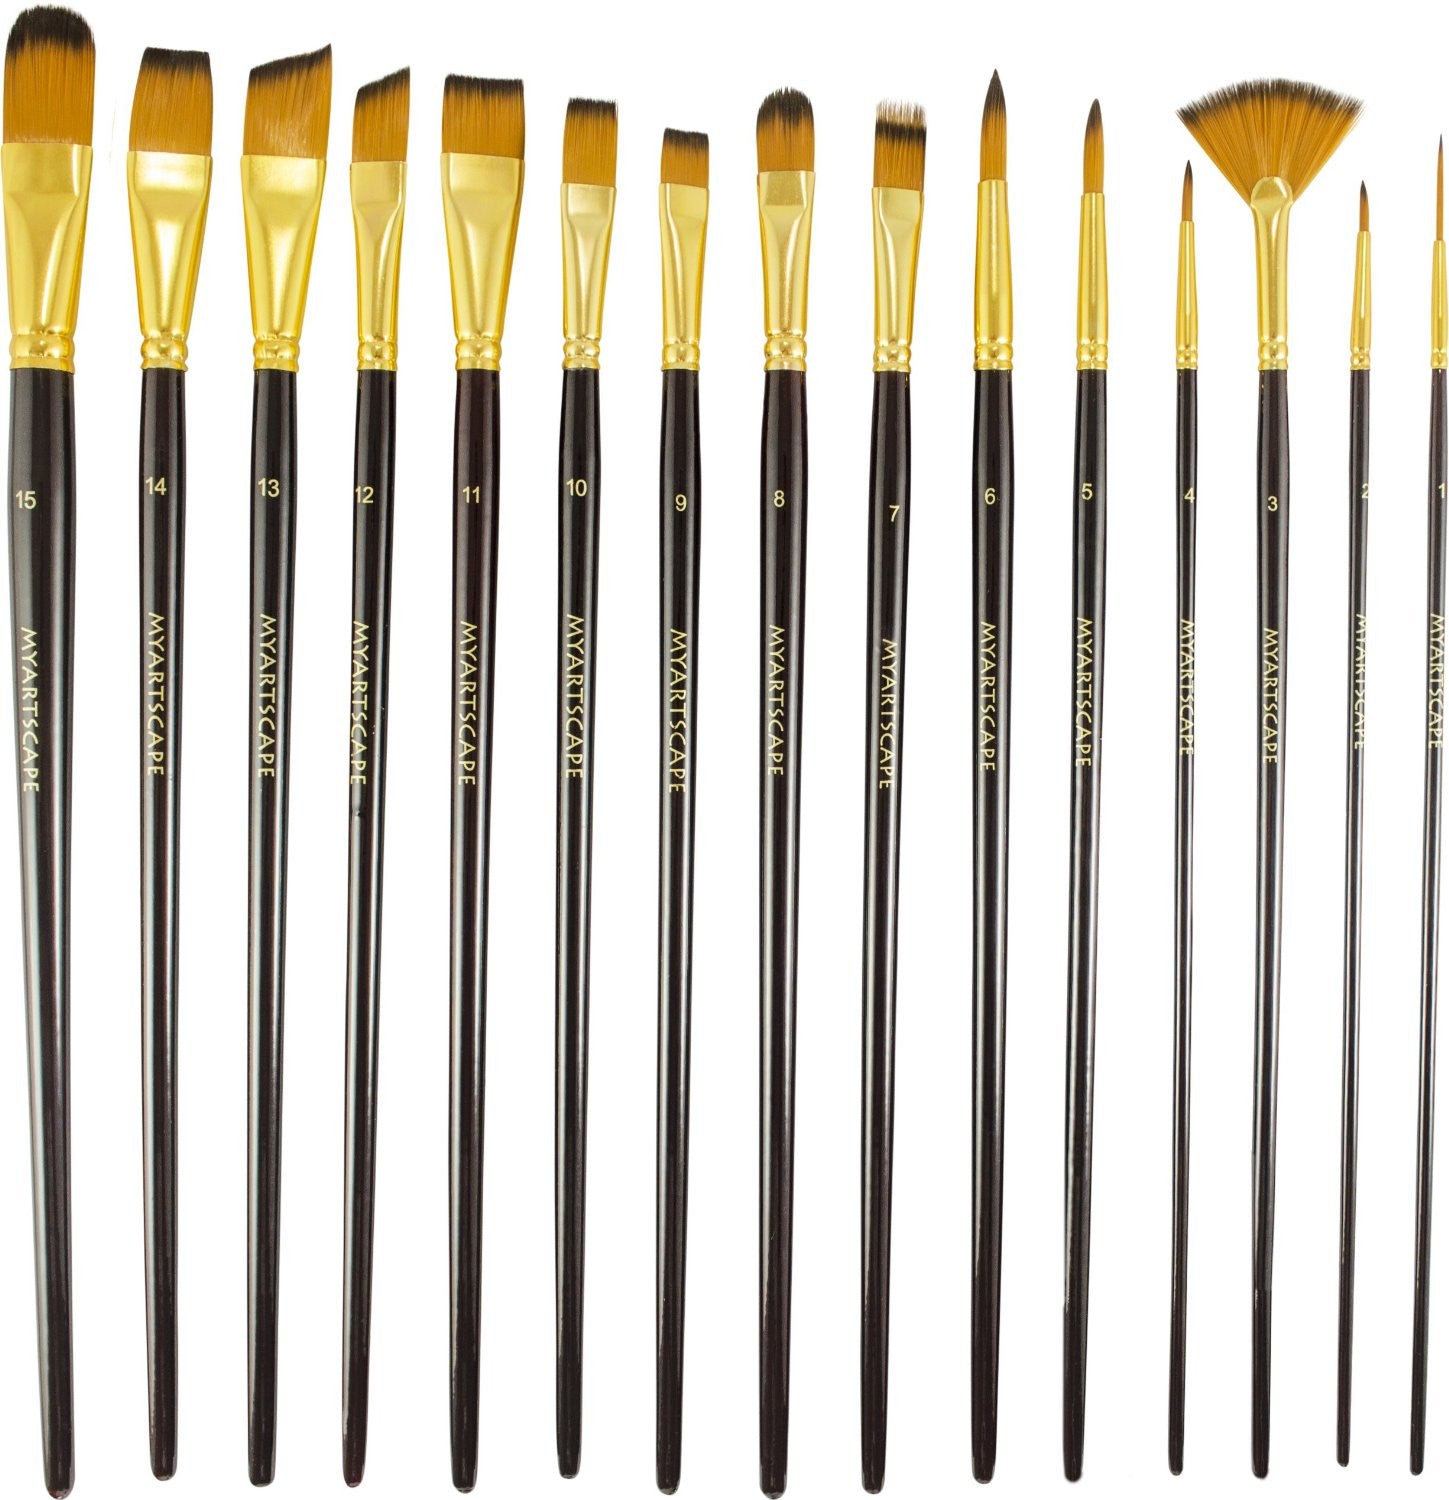 Short Handle Paint Brush - Set of 15 Art Brushes